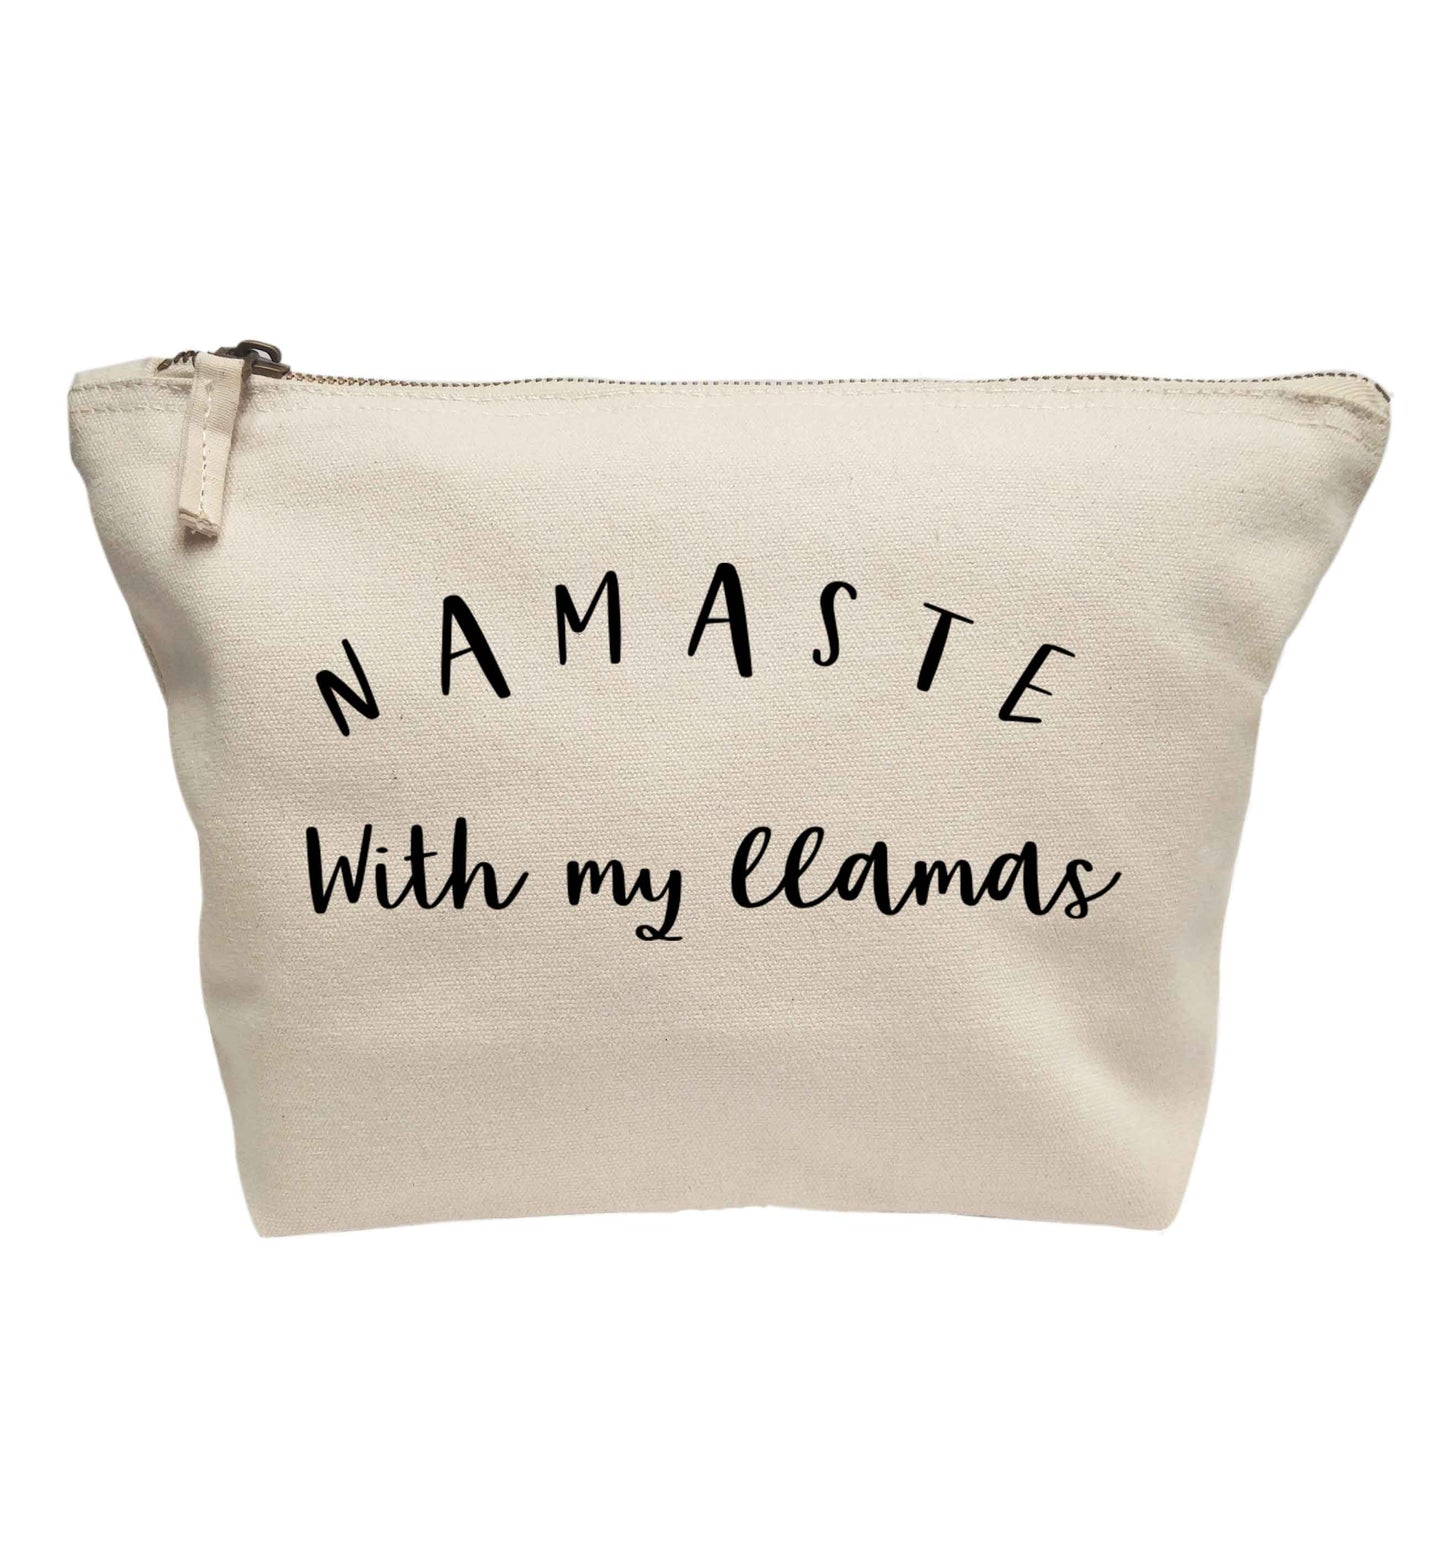 Namaste with my llamas | makeup / wash bag